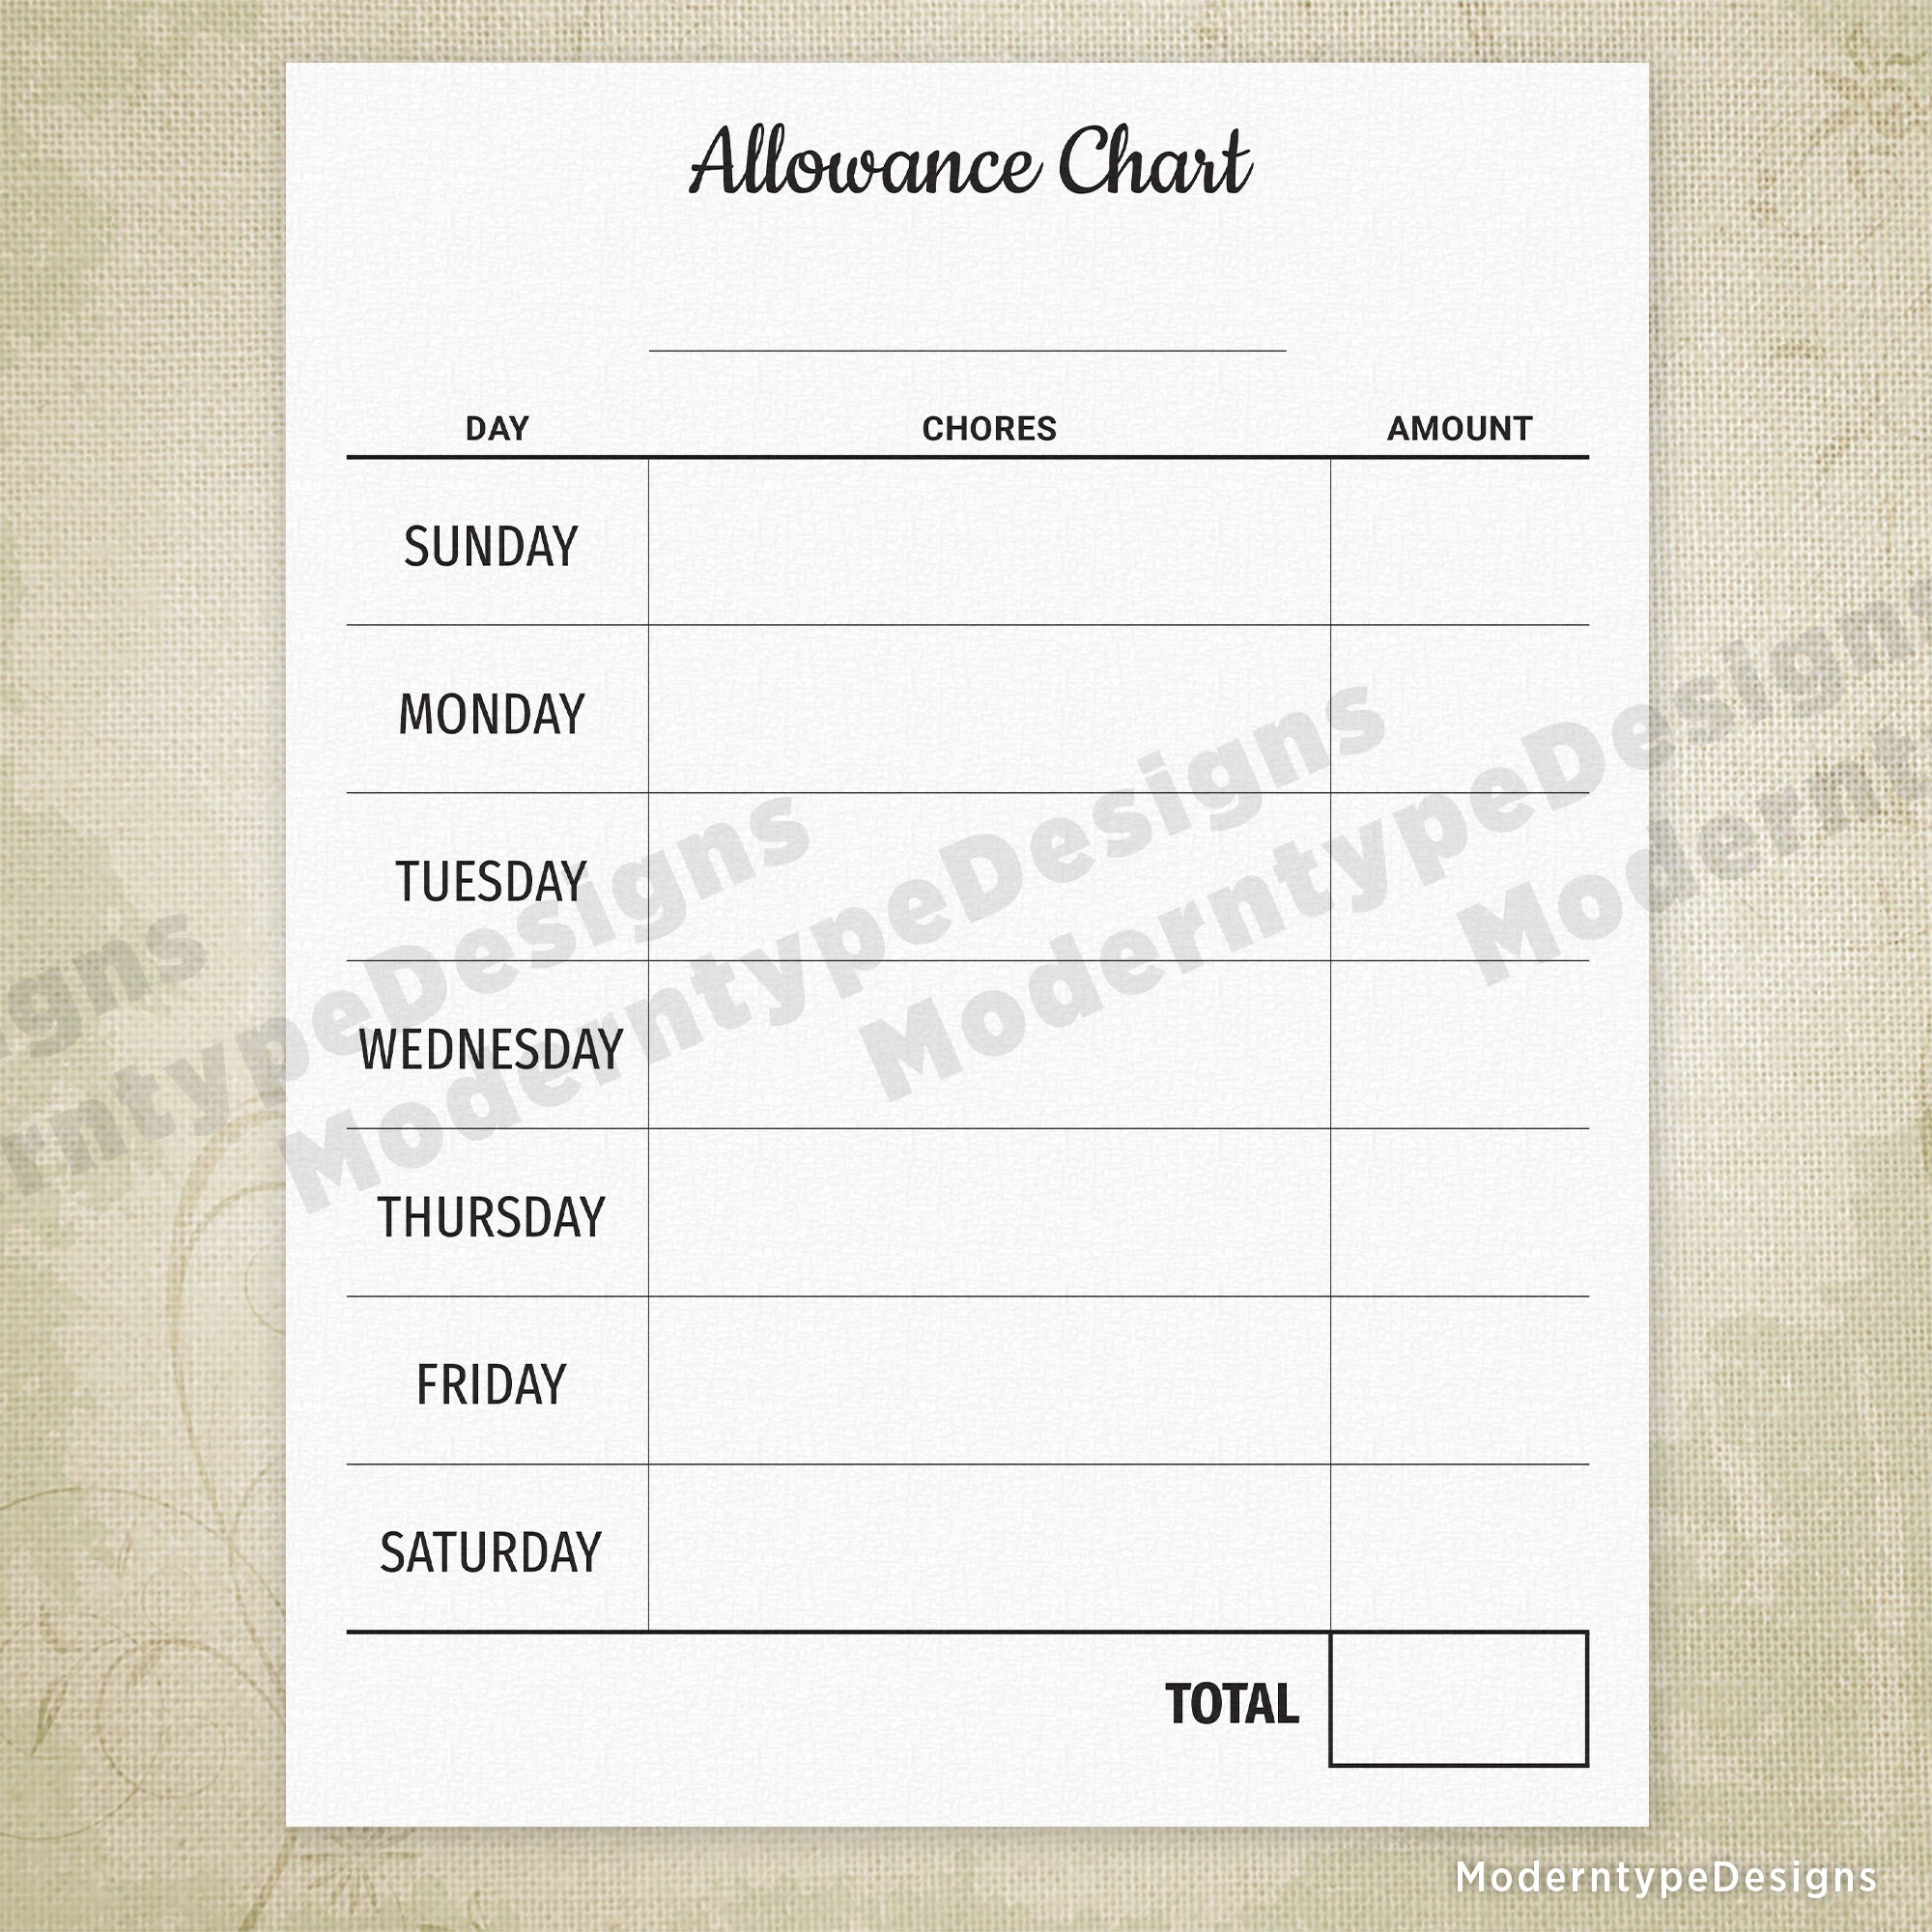 Allowance Chart Printable Form